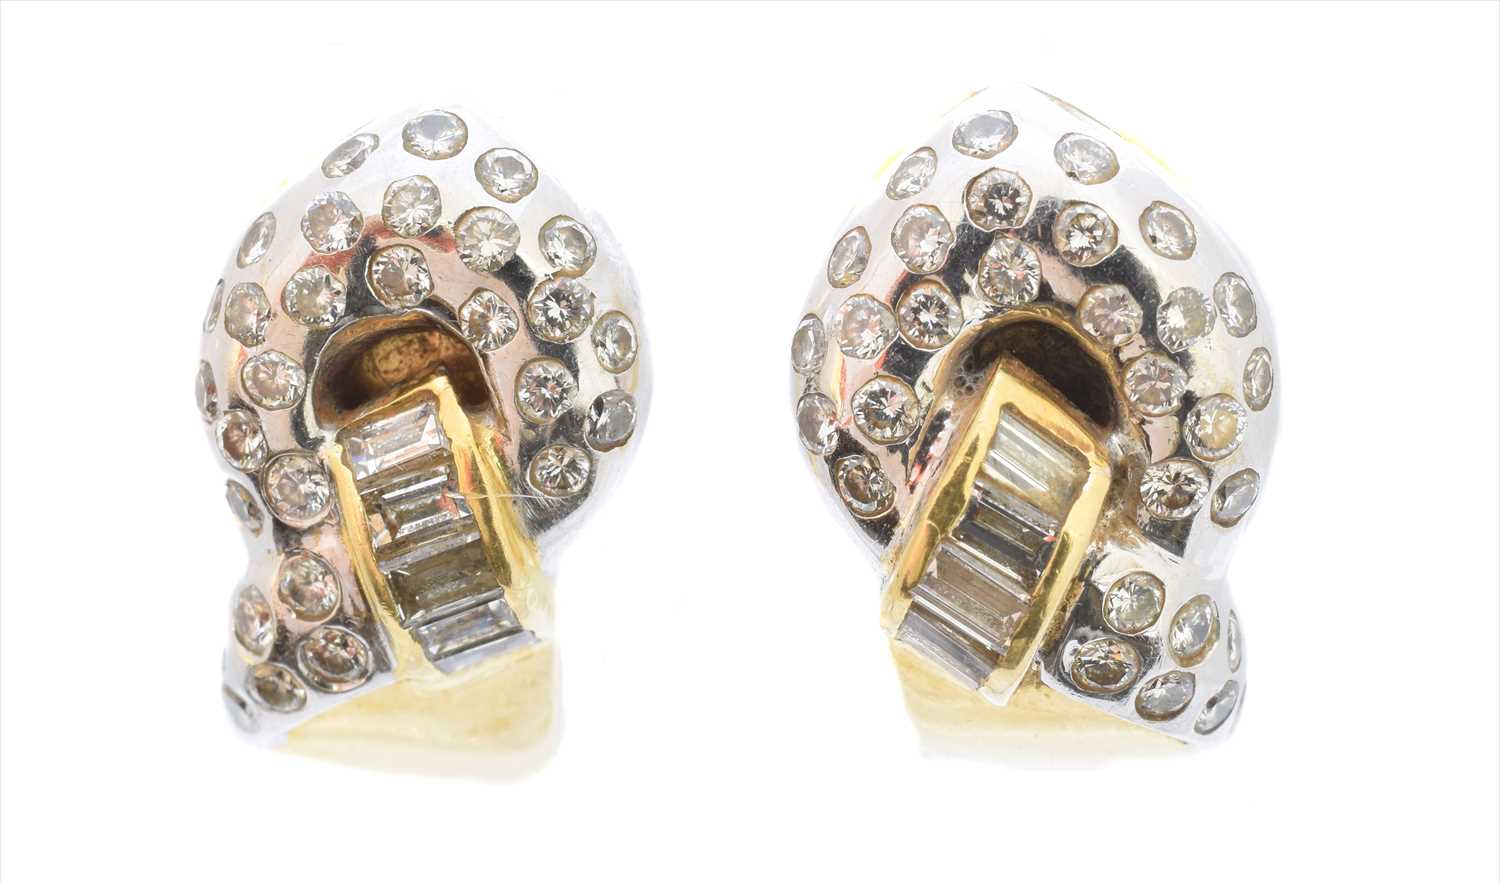 Lot 82 - A pair of diamond earrings